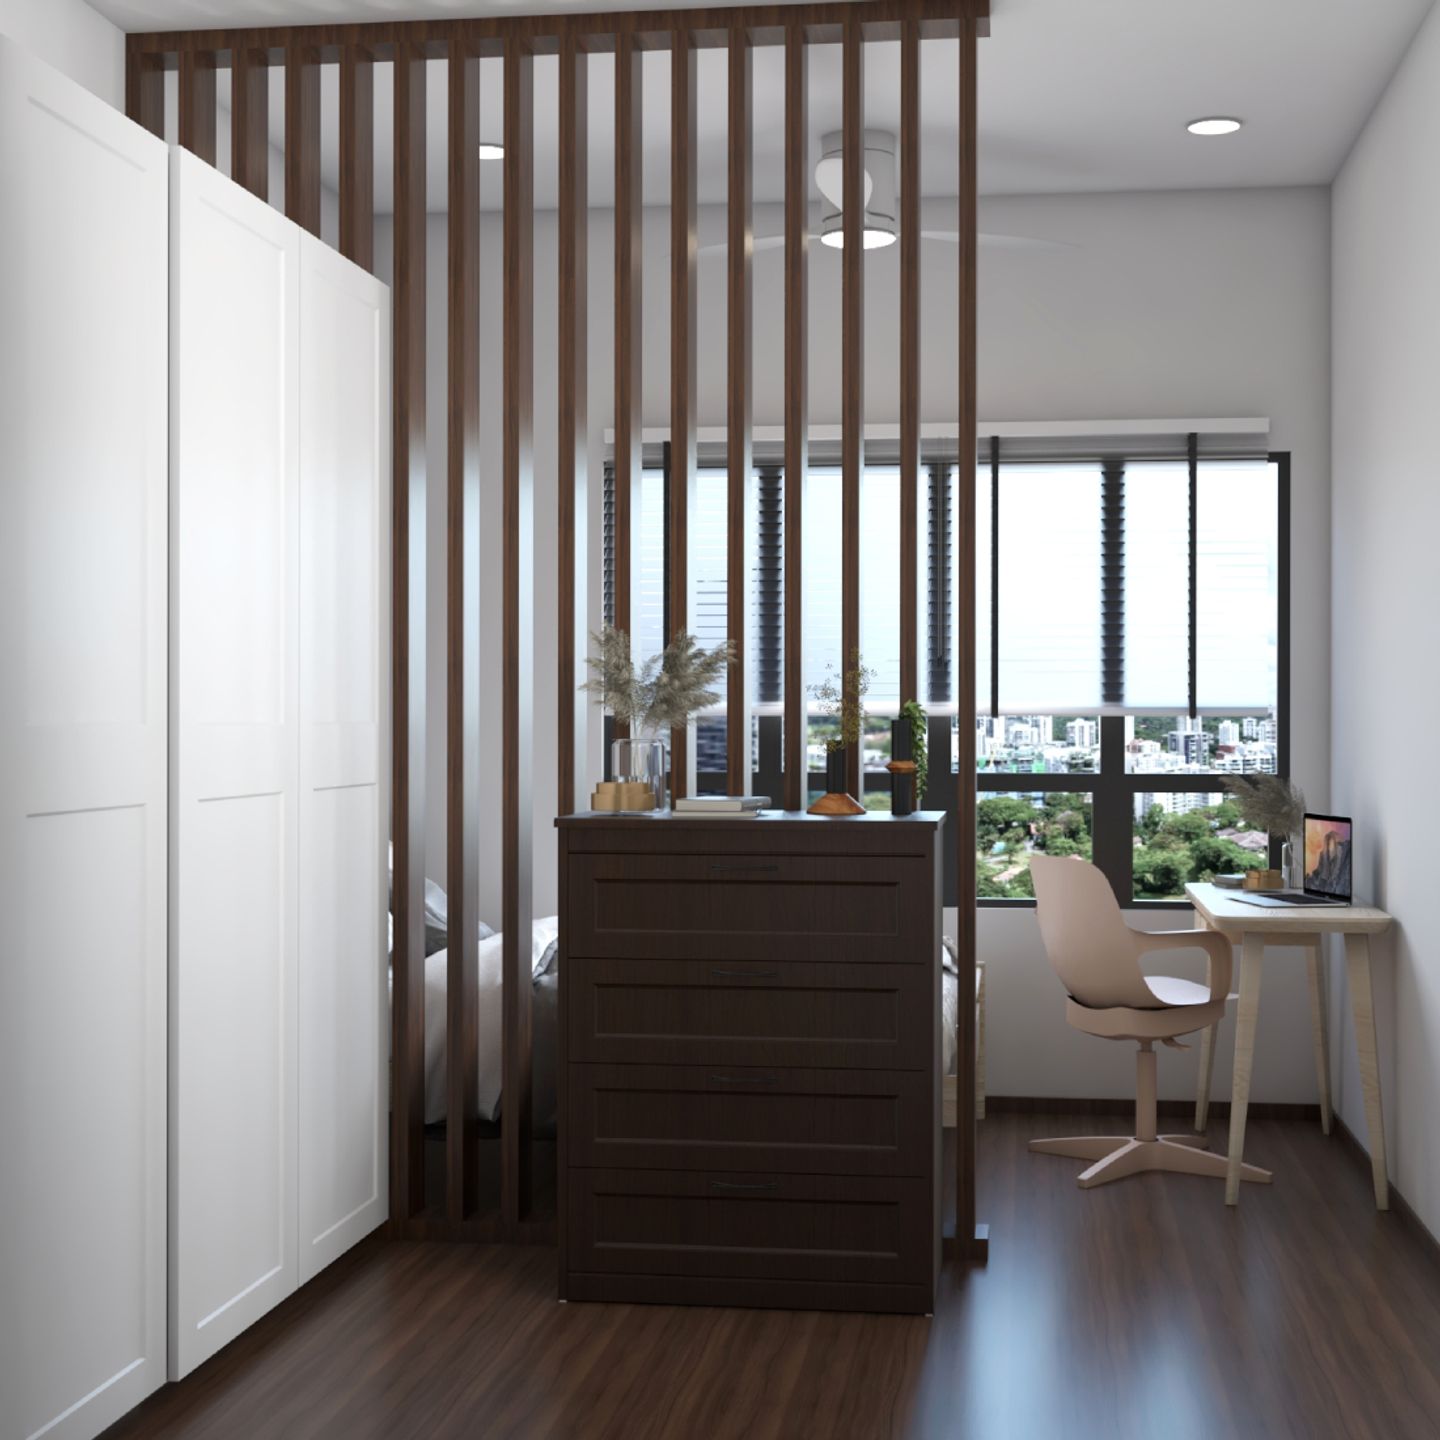 Scandinavian Interior Design For Master Bedrooms With Wooden Furnitures